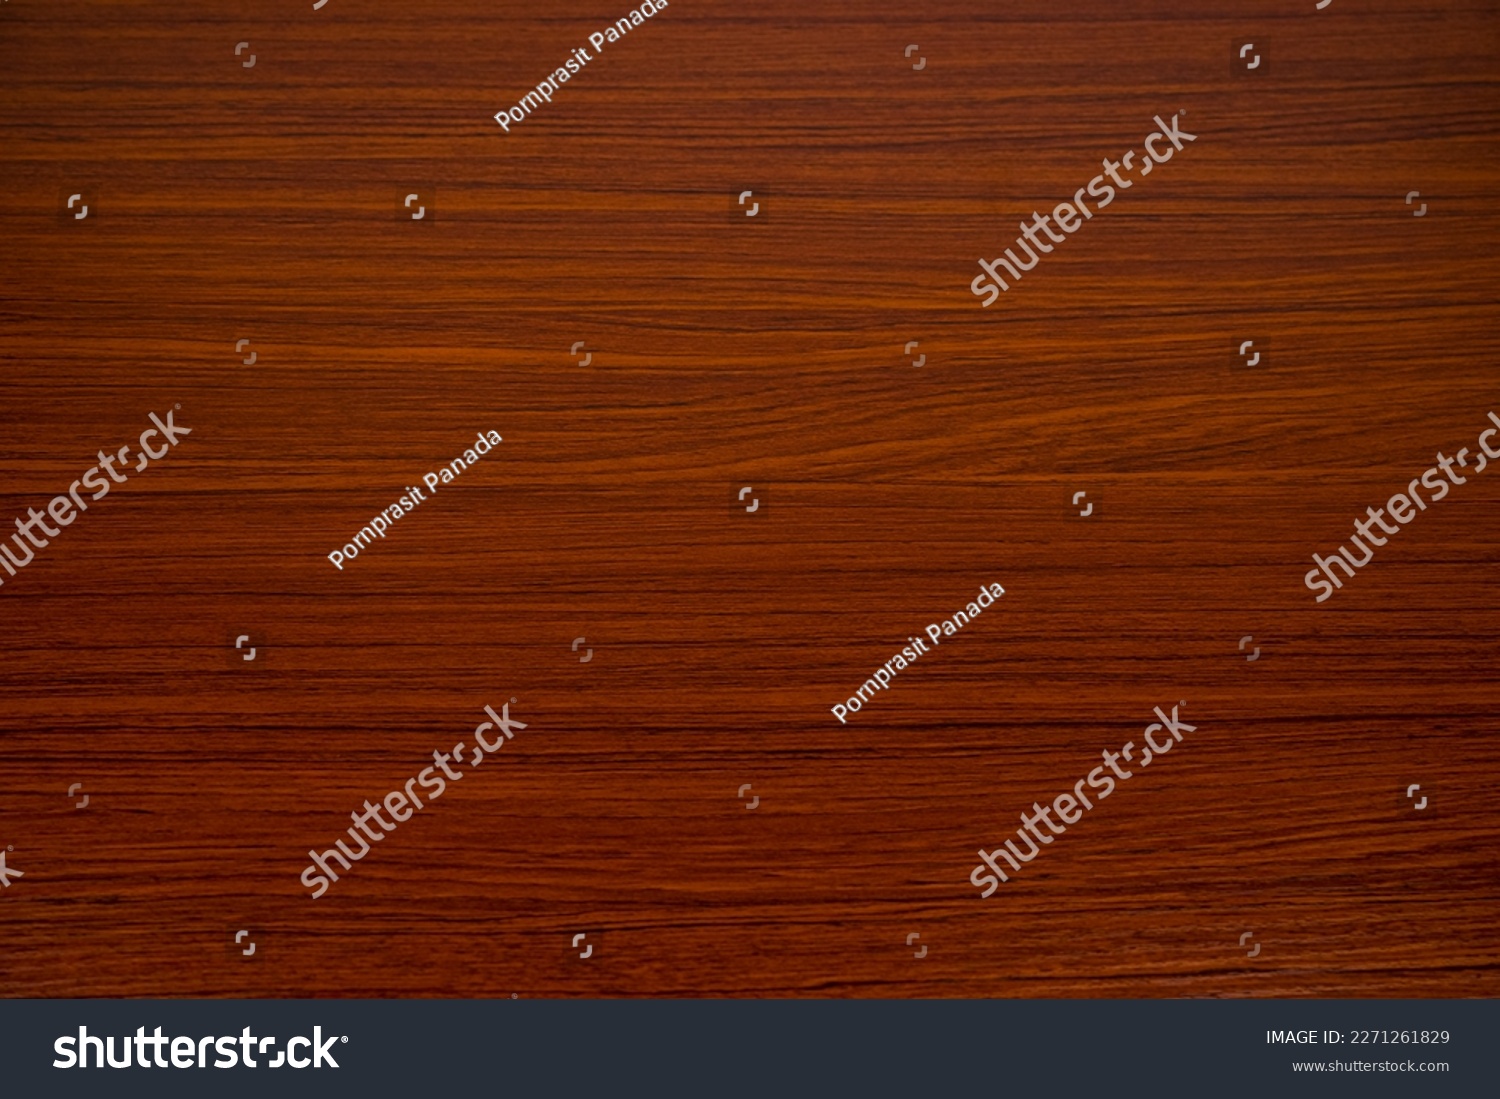 Reddish brown wood grain background. #2271261829